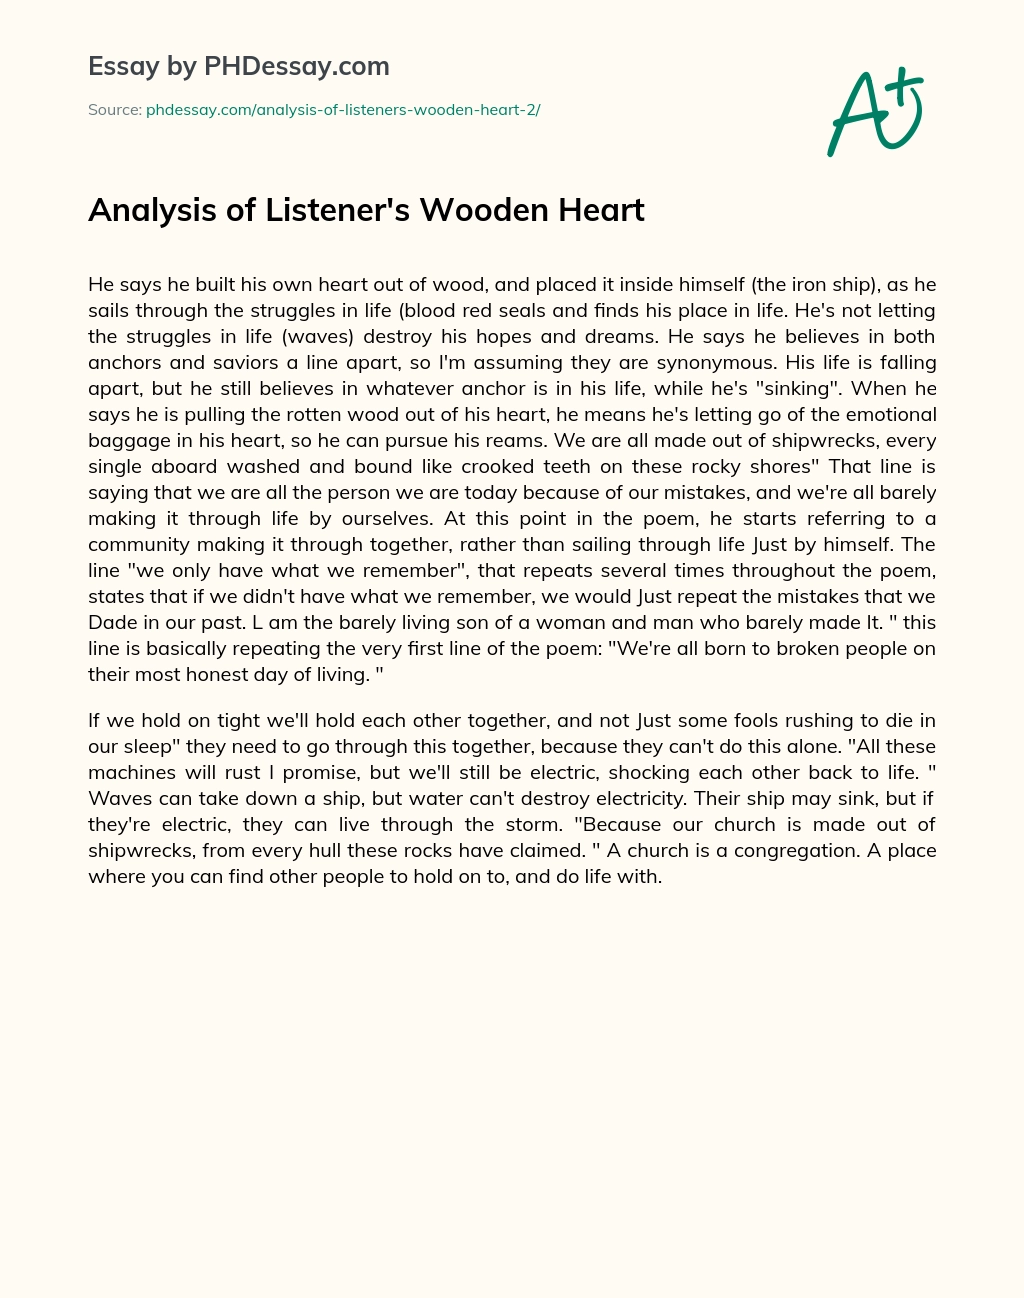 Analysis of Listener’s Wooden Heart essay